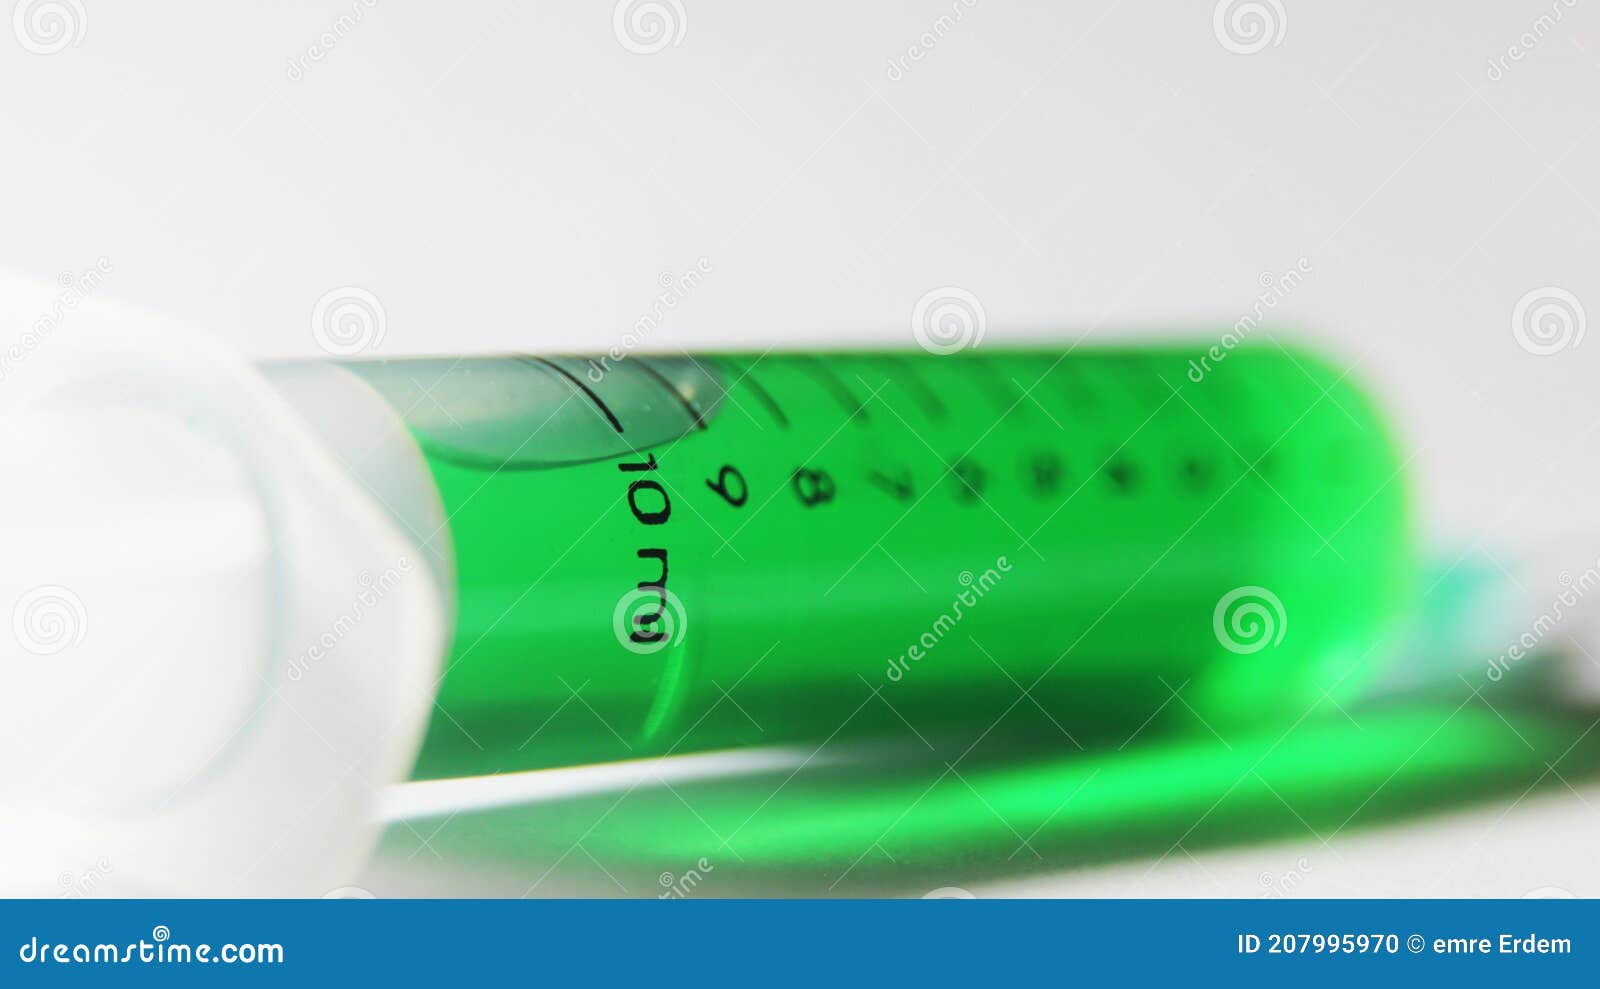 green chemical medicine in syringe. vaccine study